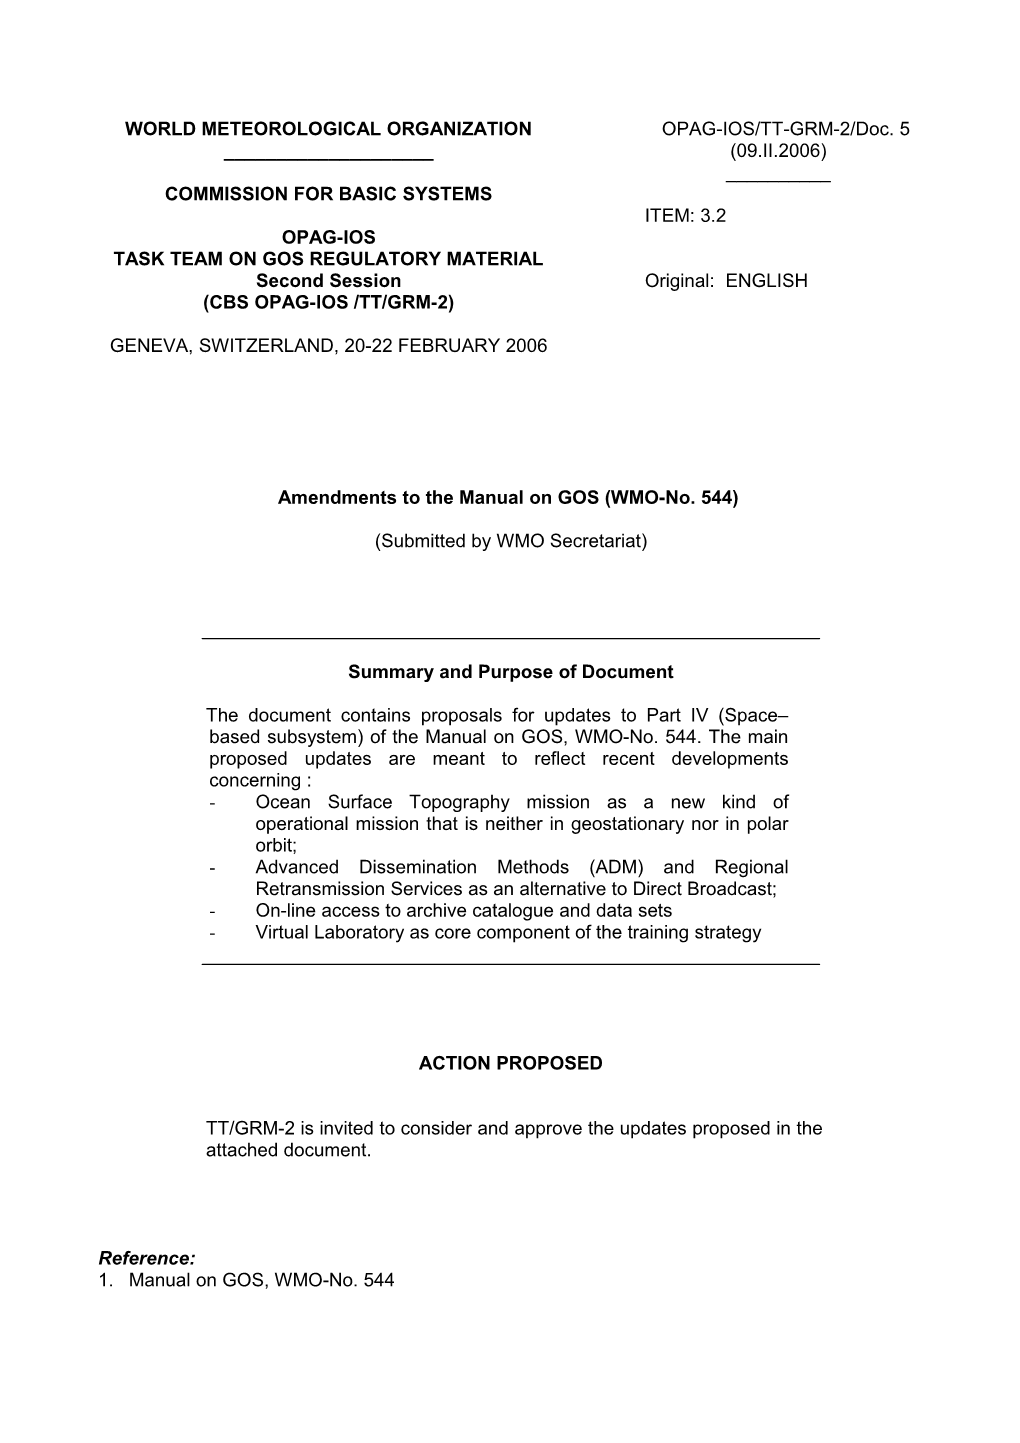 Amendments to the Manual on GOS (WMO-No. 544)